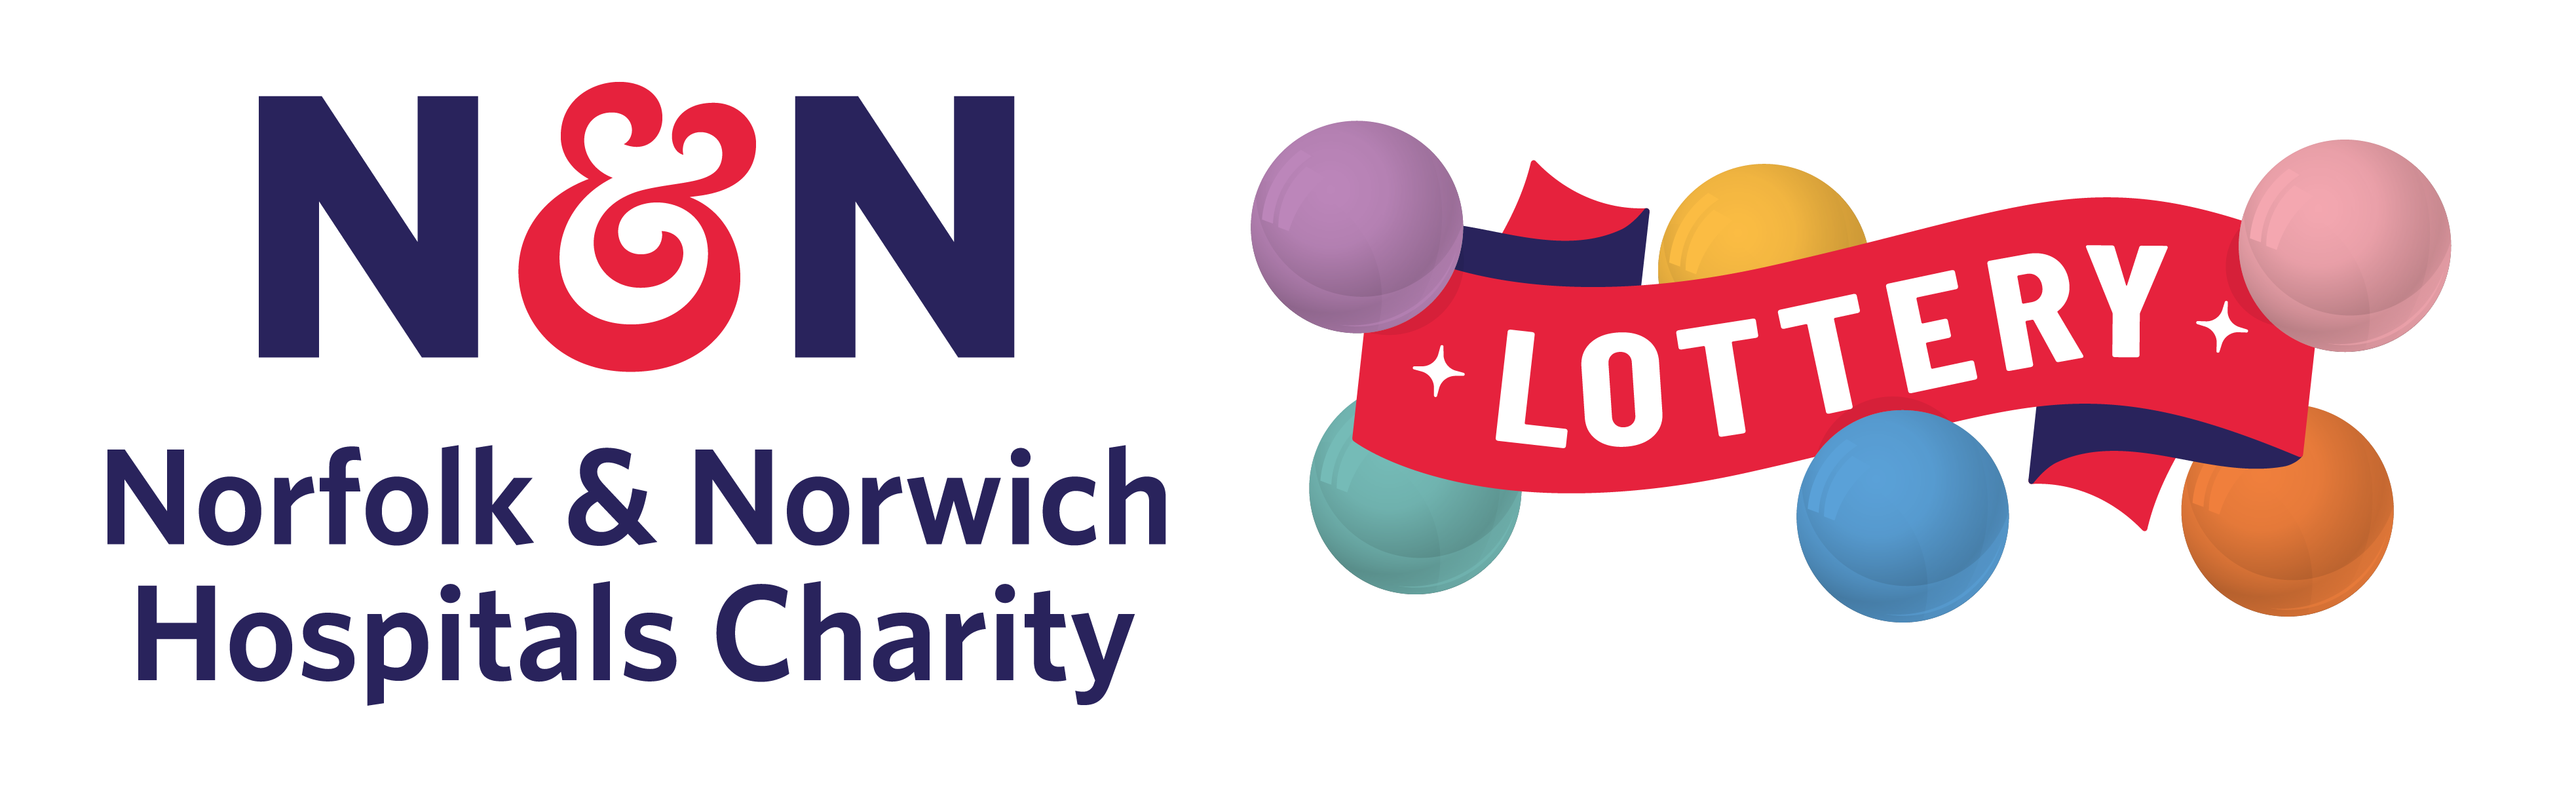 Norfolk & Norwich Hospitals Charity Lottery logo